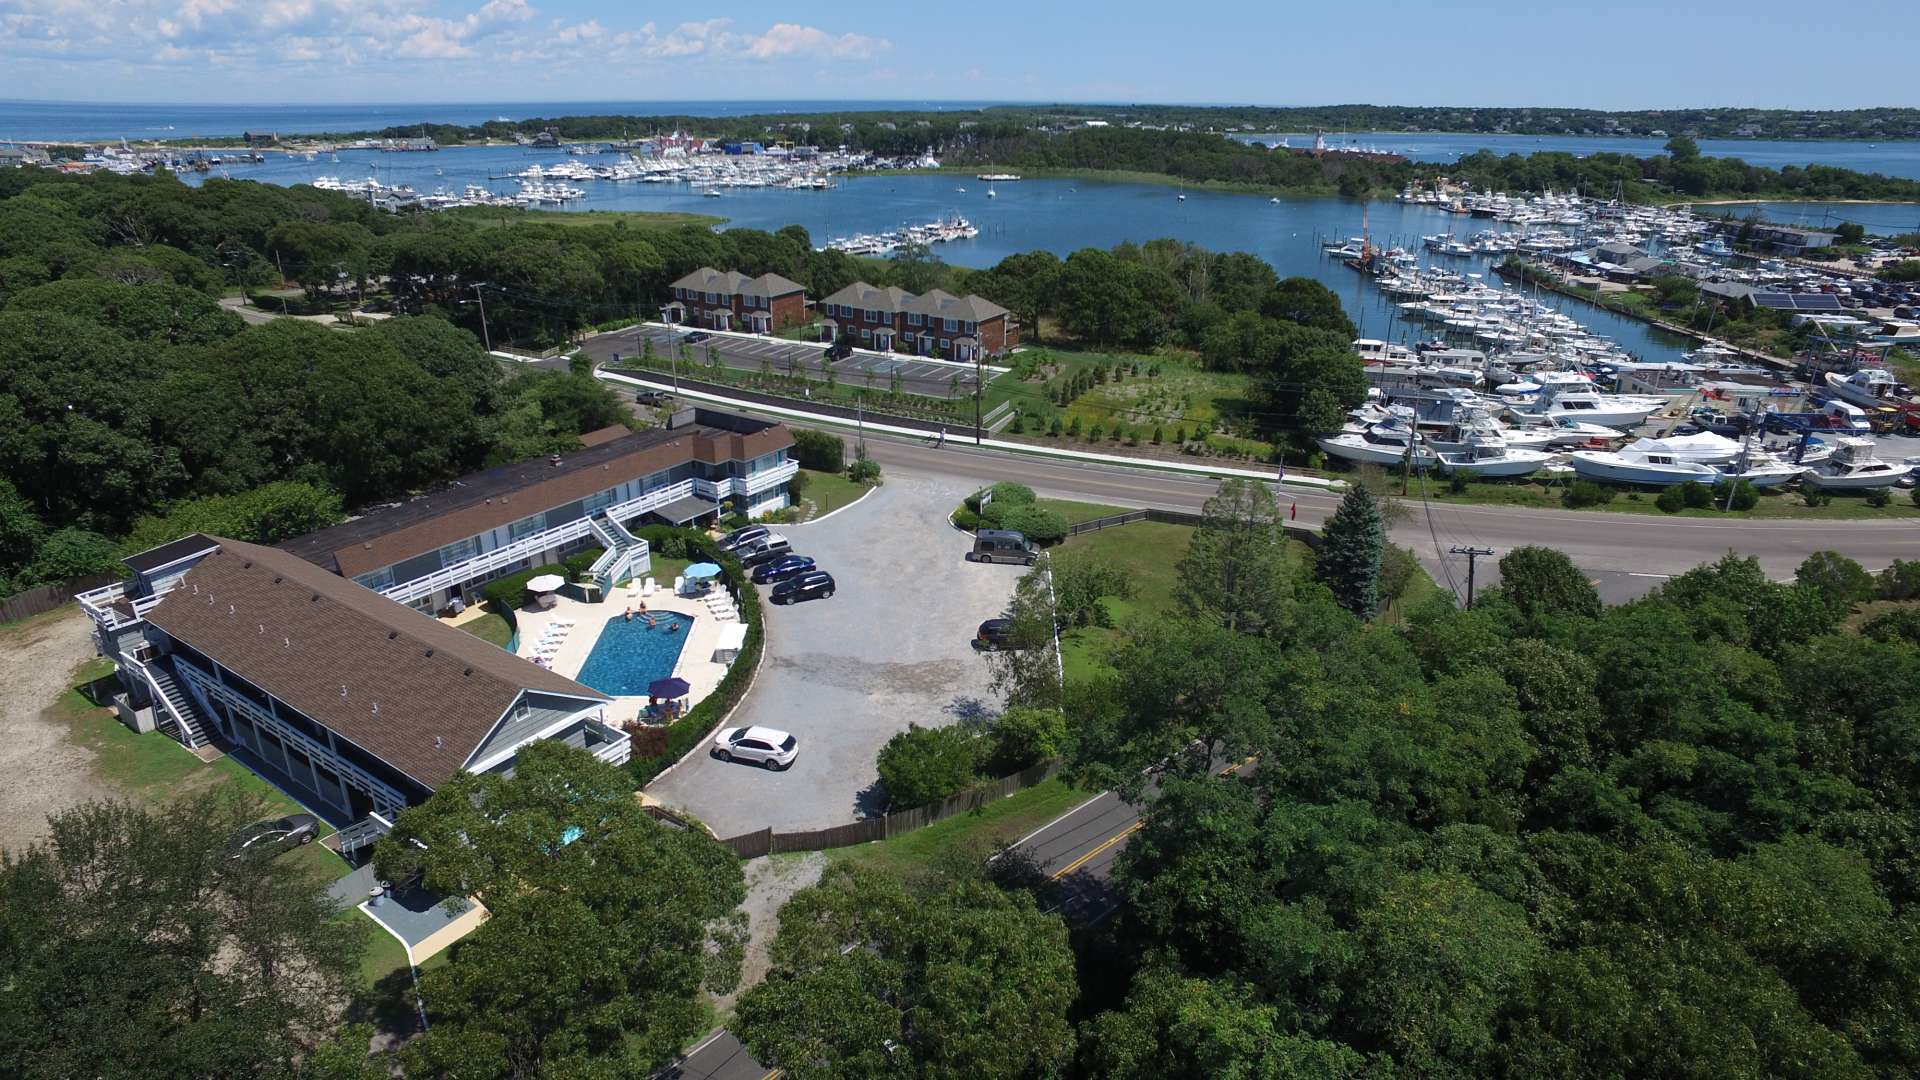 Aerial view of Harborside Resort Motel and Montauk Harbor